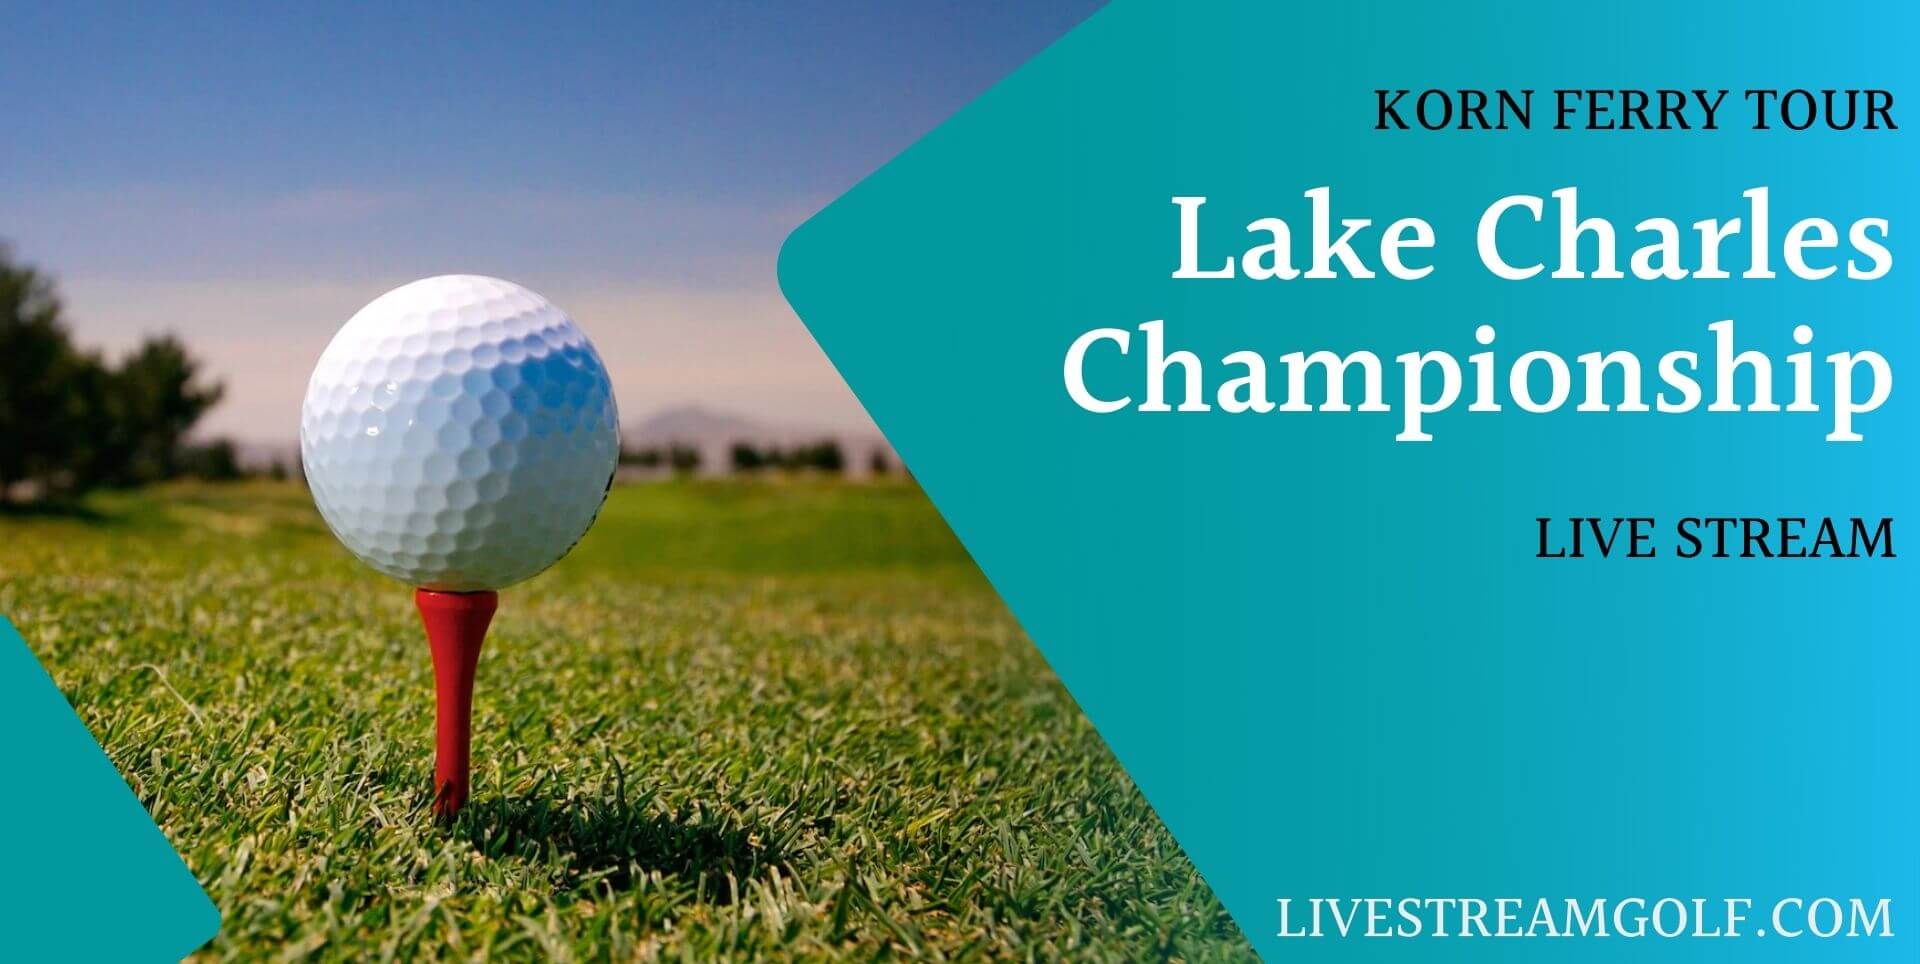 Lake Charles Championship Live Stream Korn Ferry